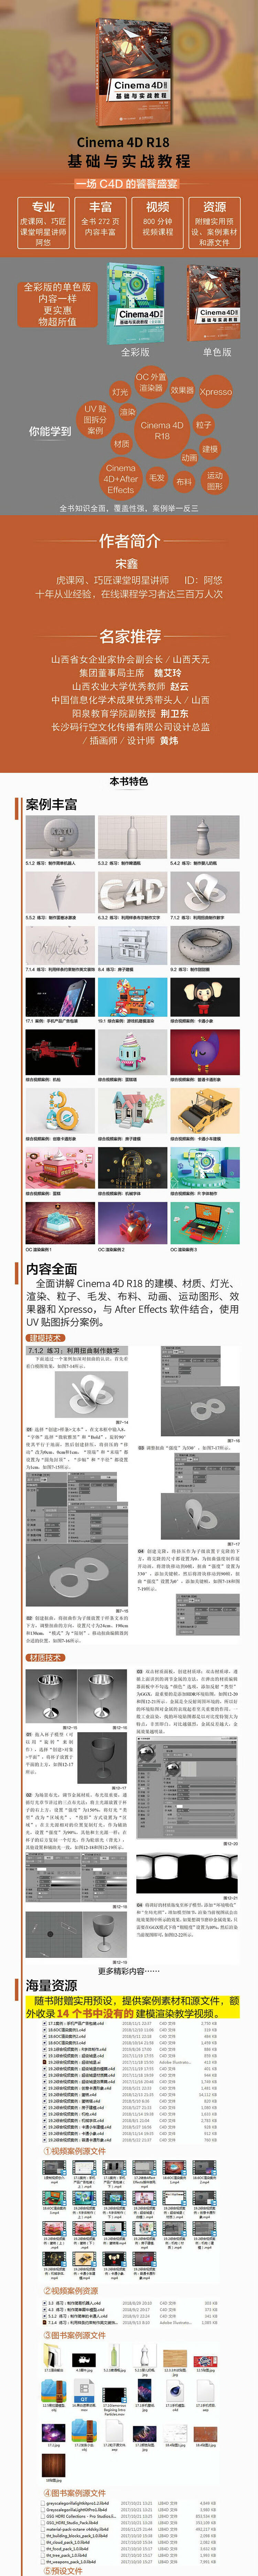 Cinema 4d R18基础与实战教程 宋鑫 摘要书评试读 京东图书